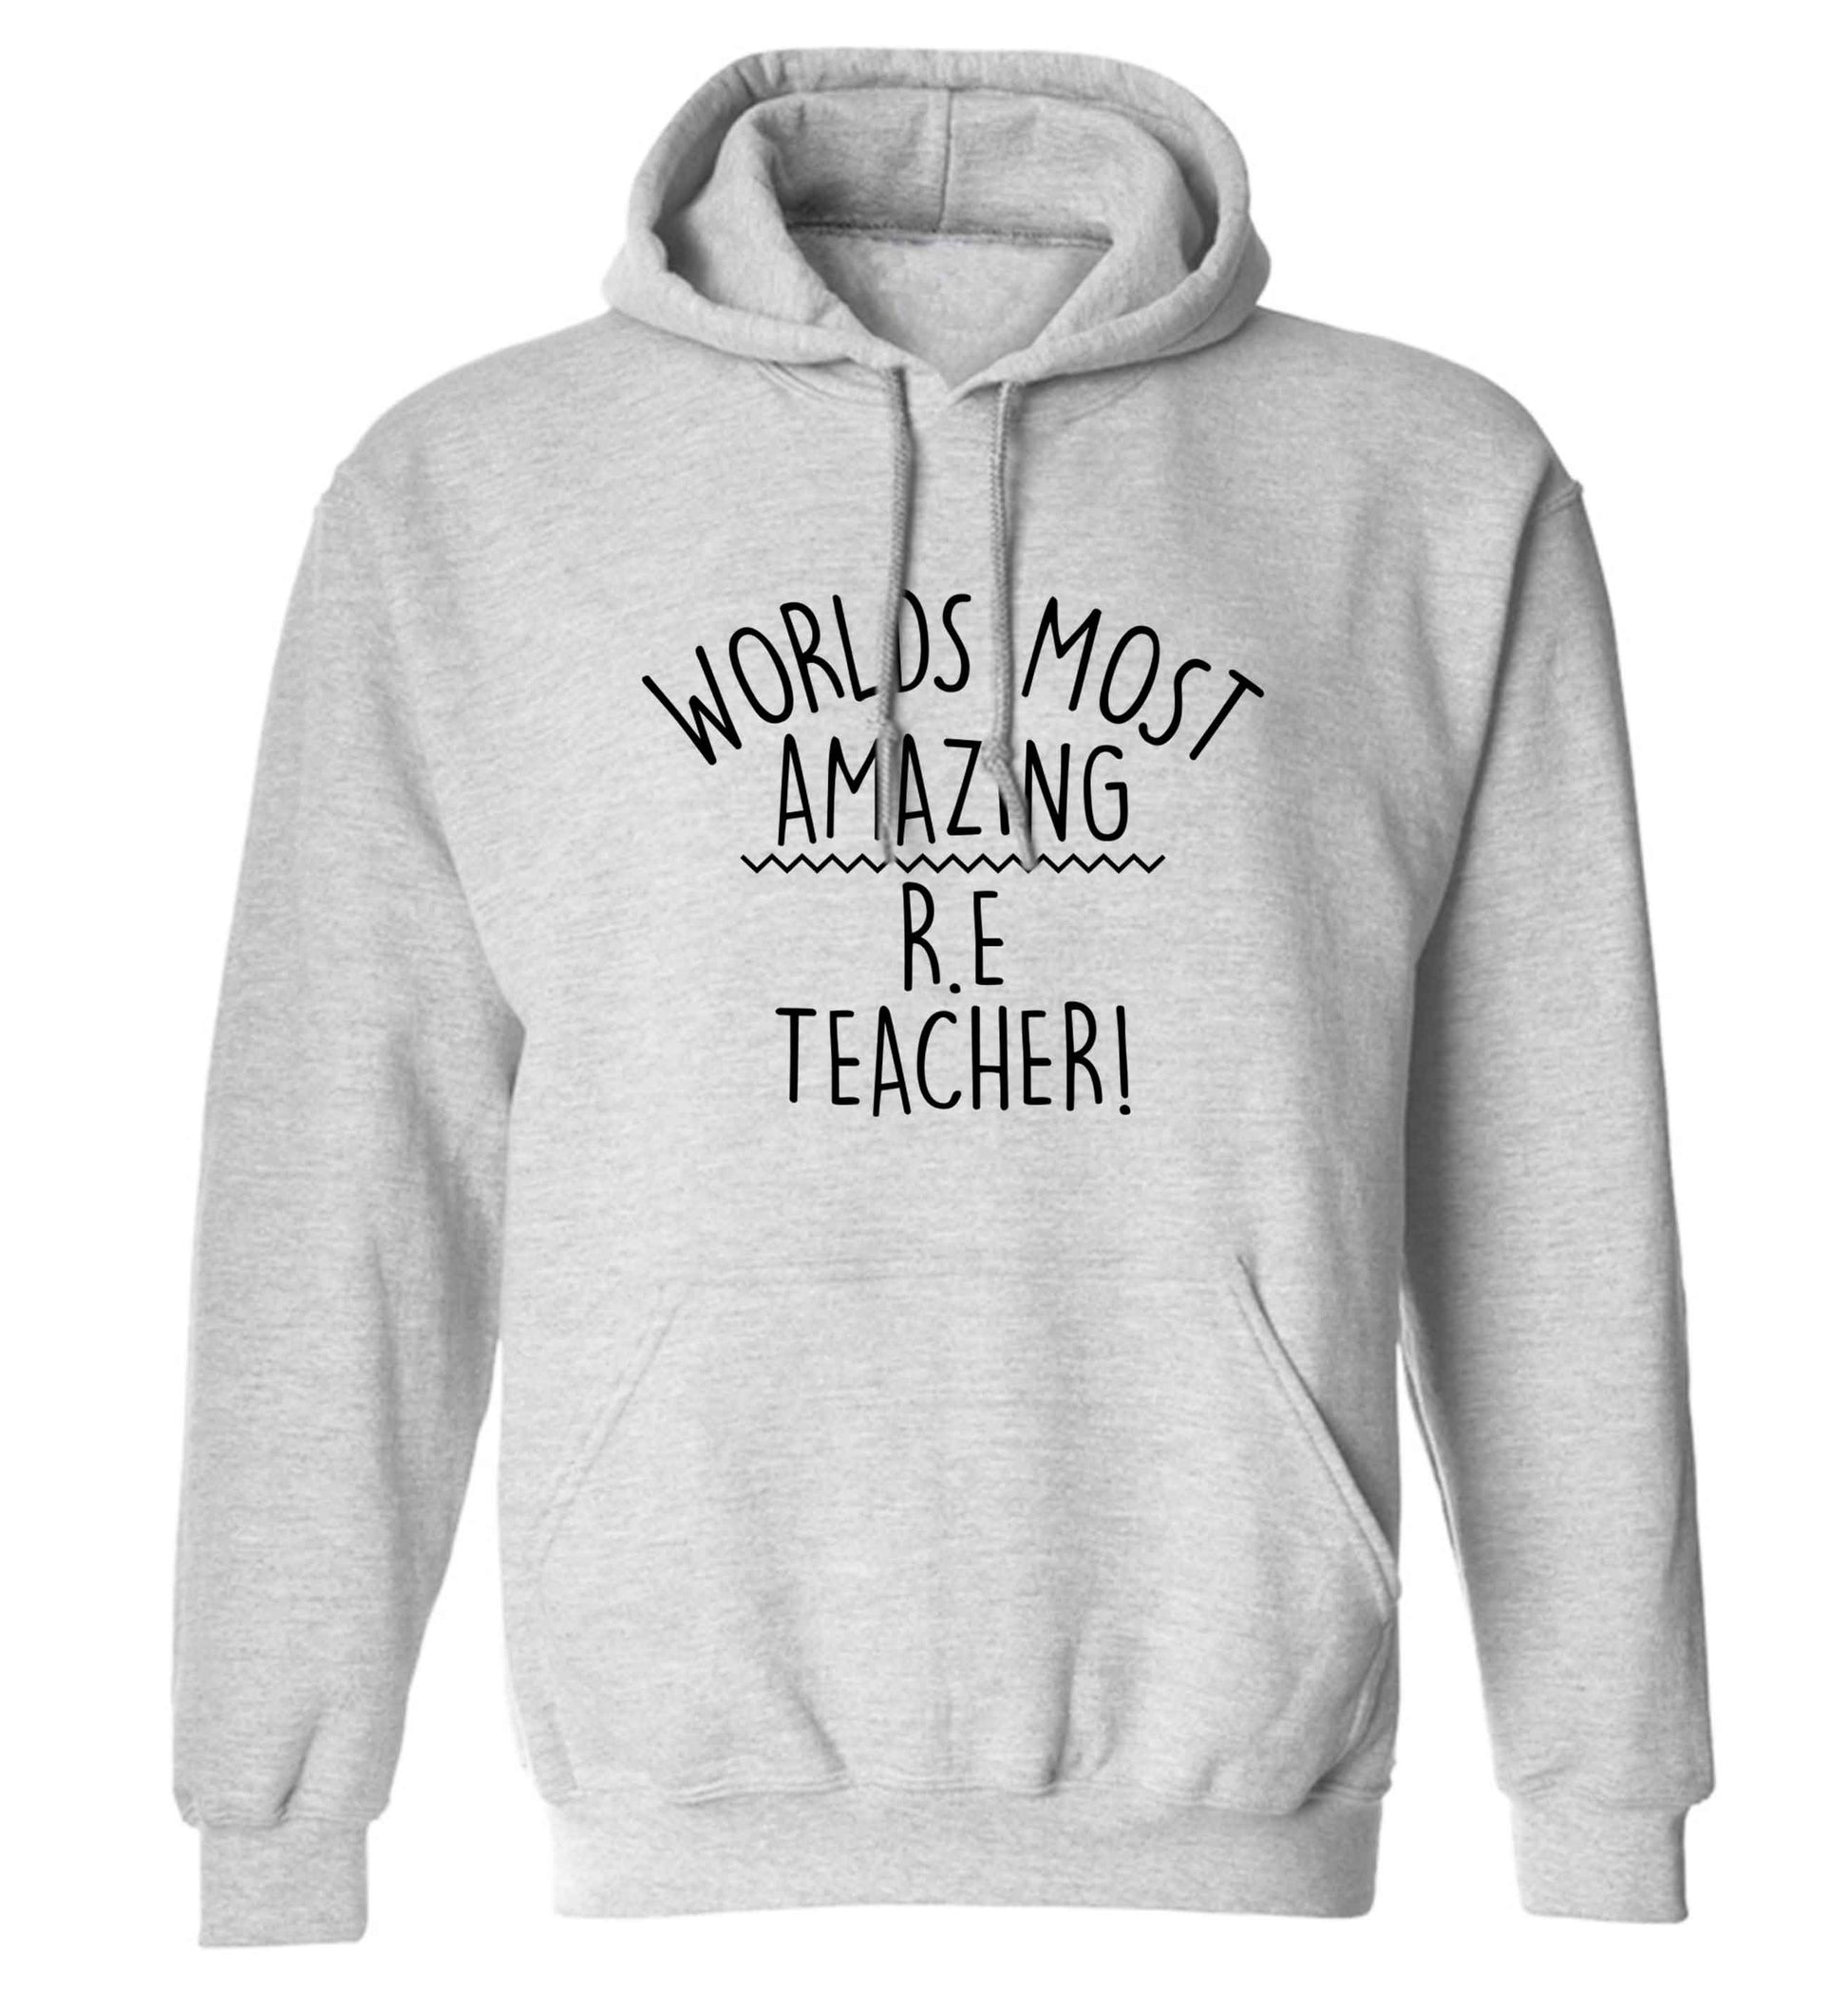 Worlds most amazing R.E teacher adults unisex grey hoodie 2XL